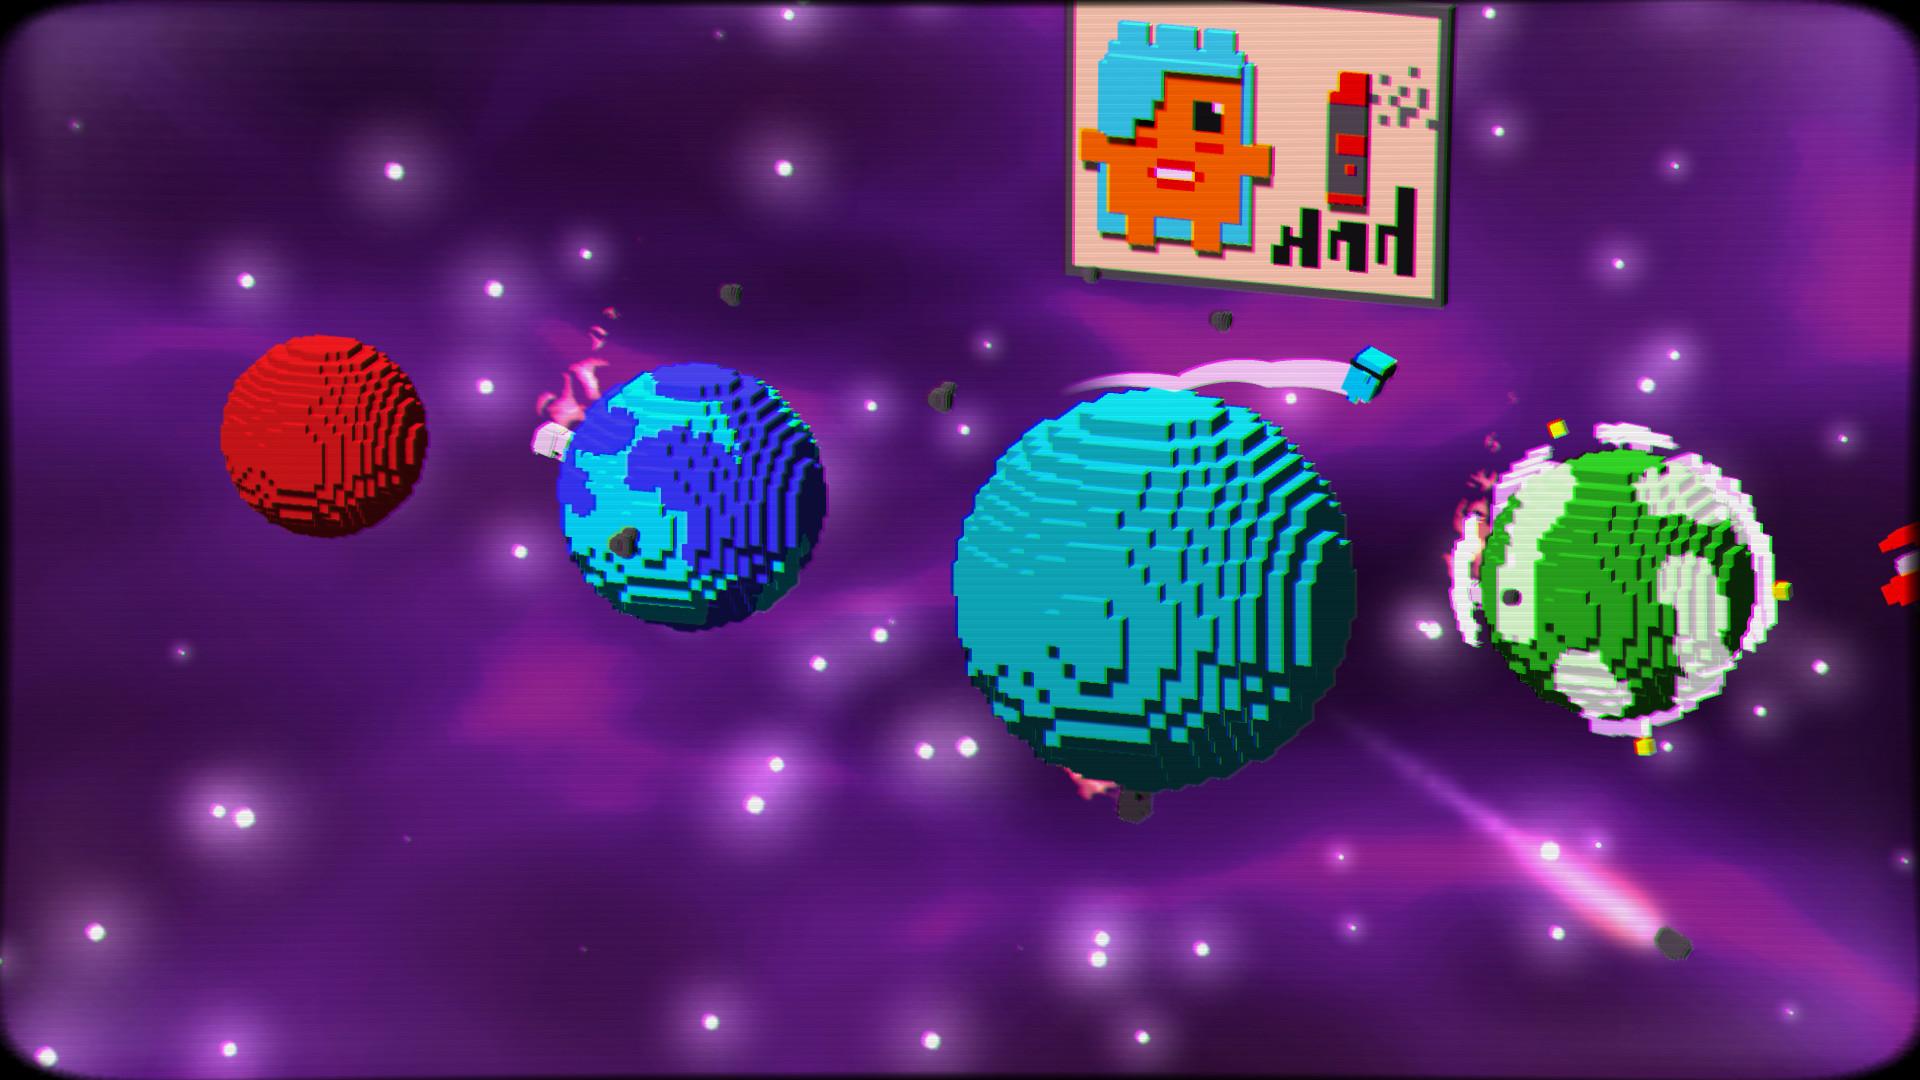 Screenshot №10 from game Cosmic Leap